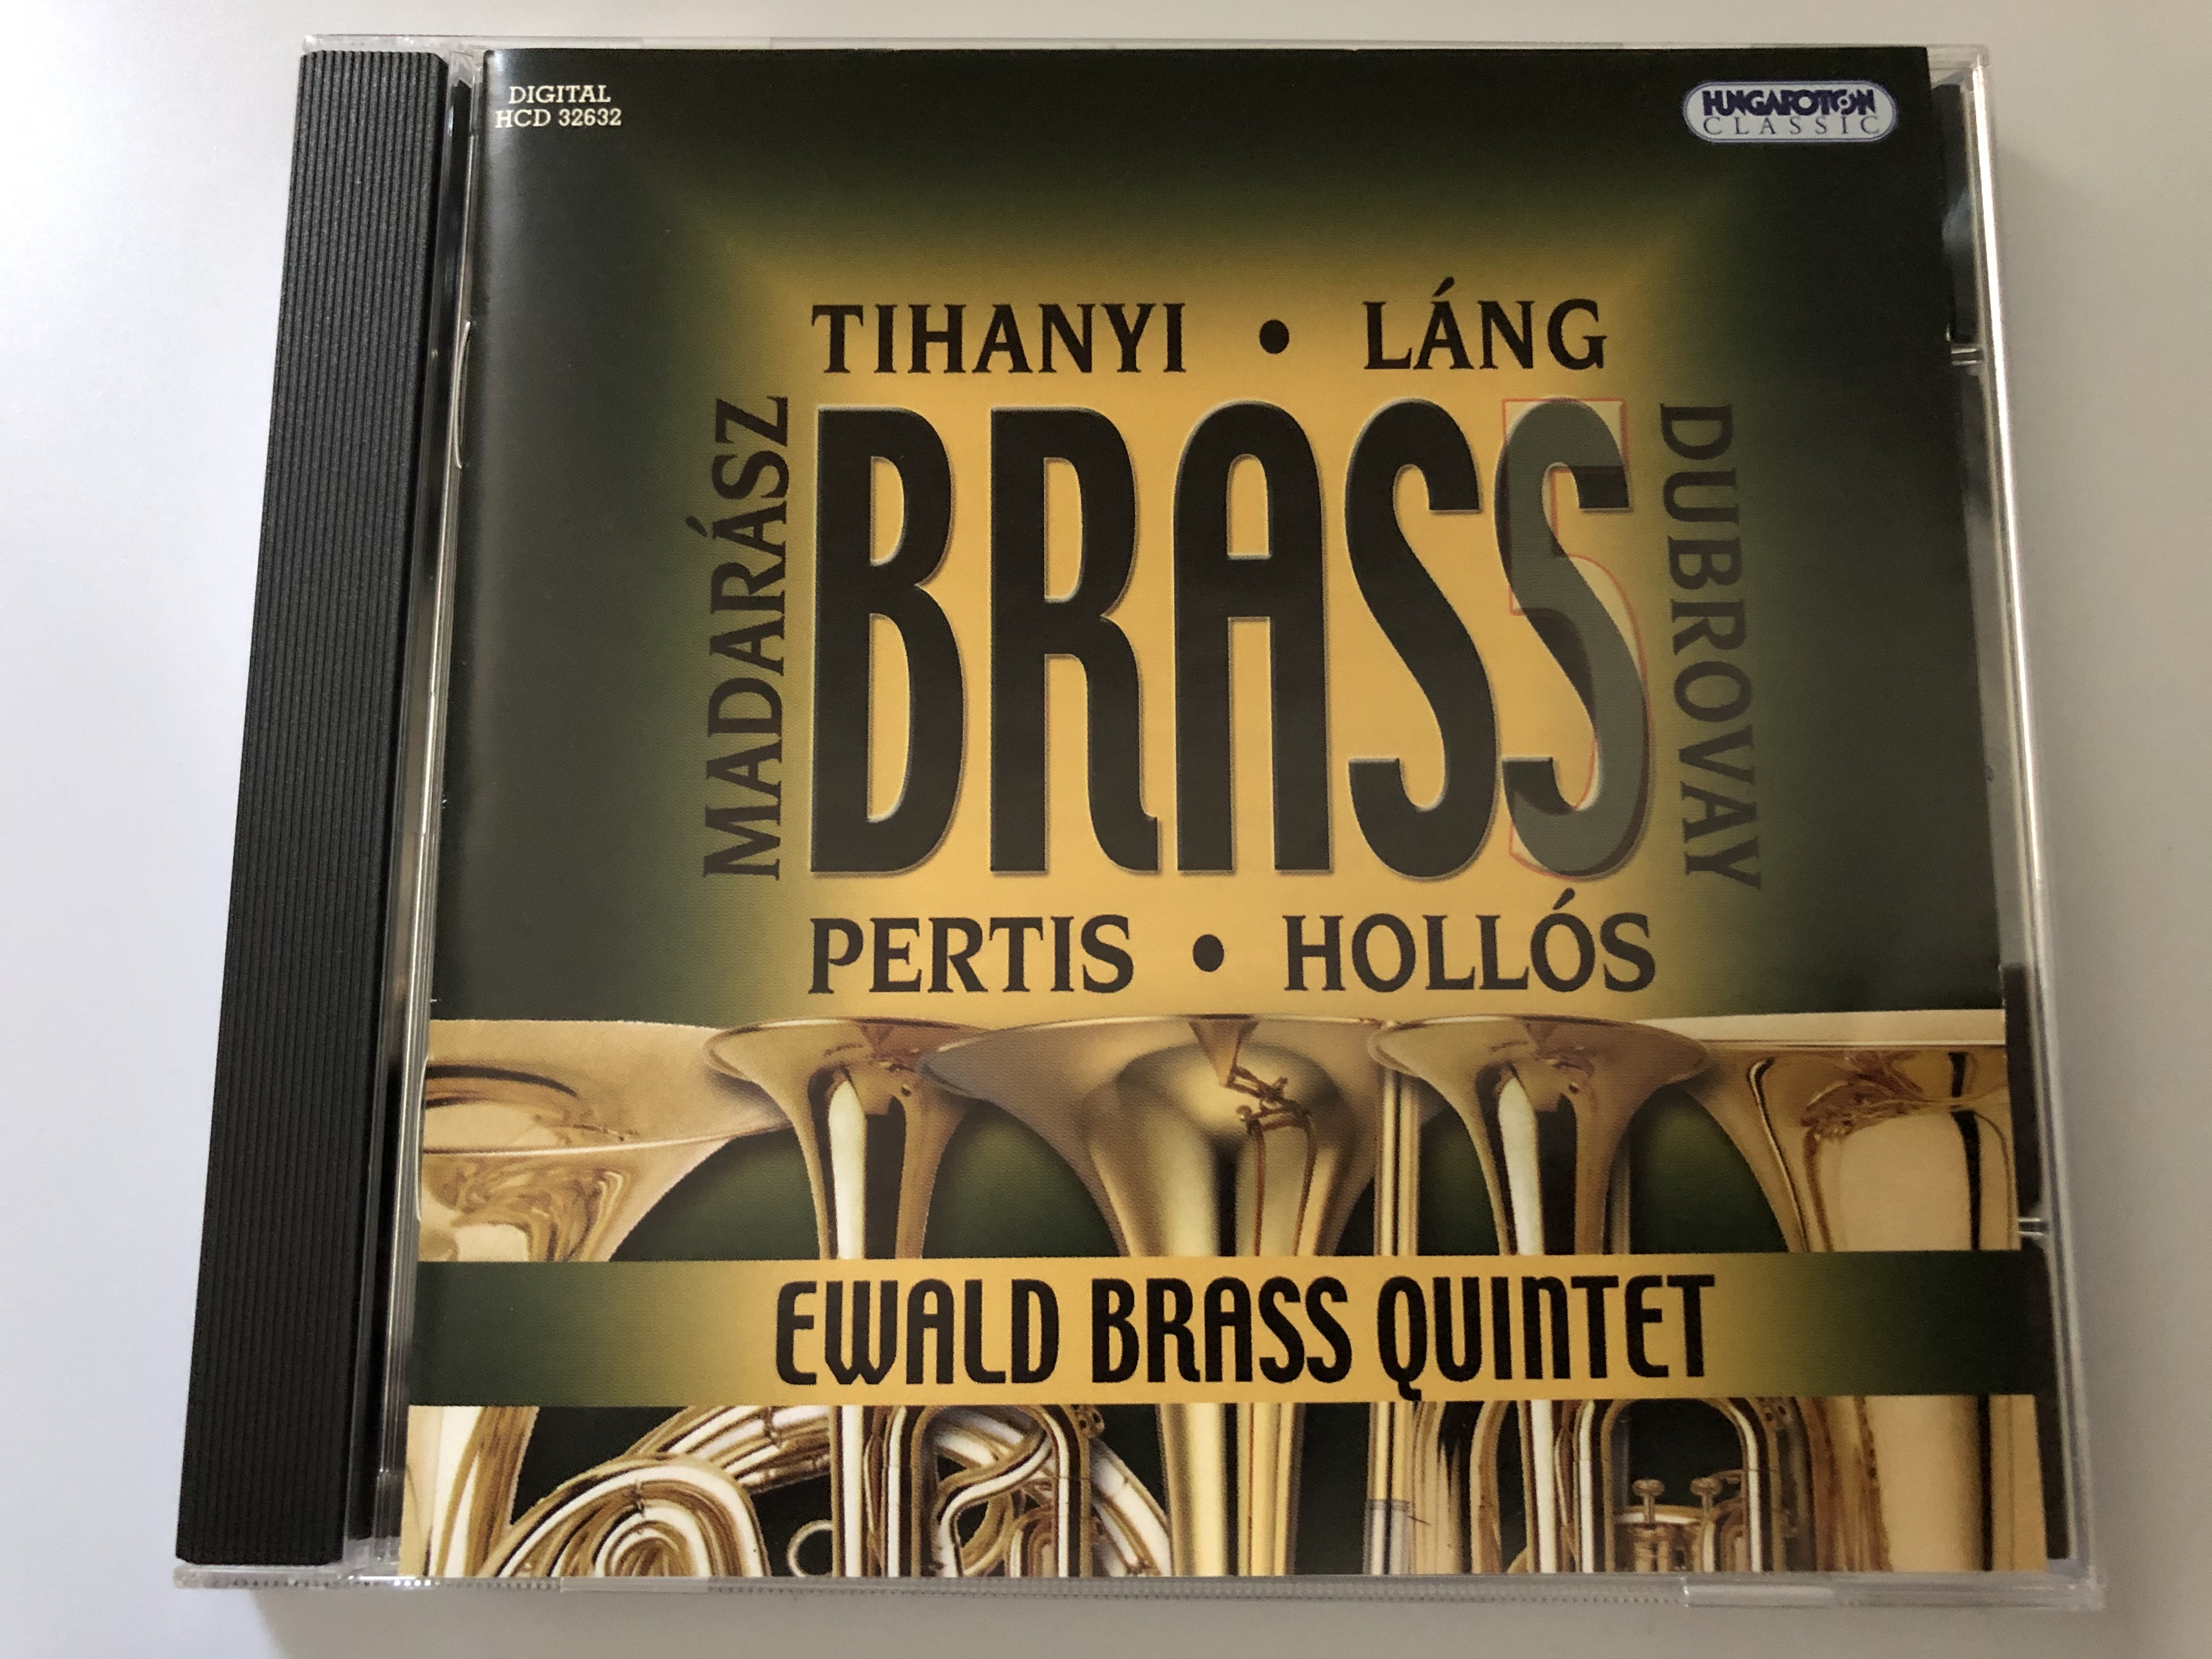 brass-5-tihanyi-lang-dubrovay-hollos-pertis-madarasz-ewald-brass-quintet-hungaroton-classic-audio-cd-2009-stereo-hcd-32632-1-.jpg